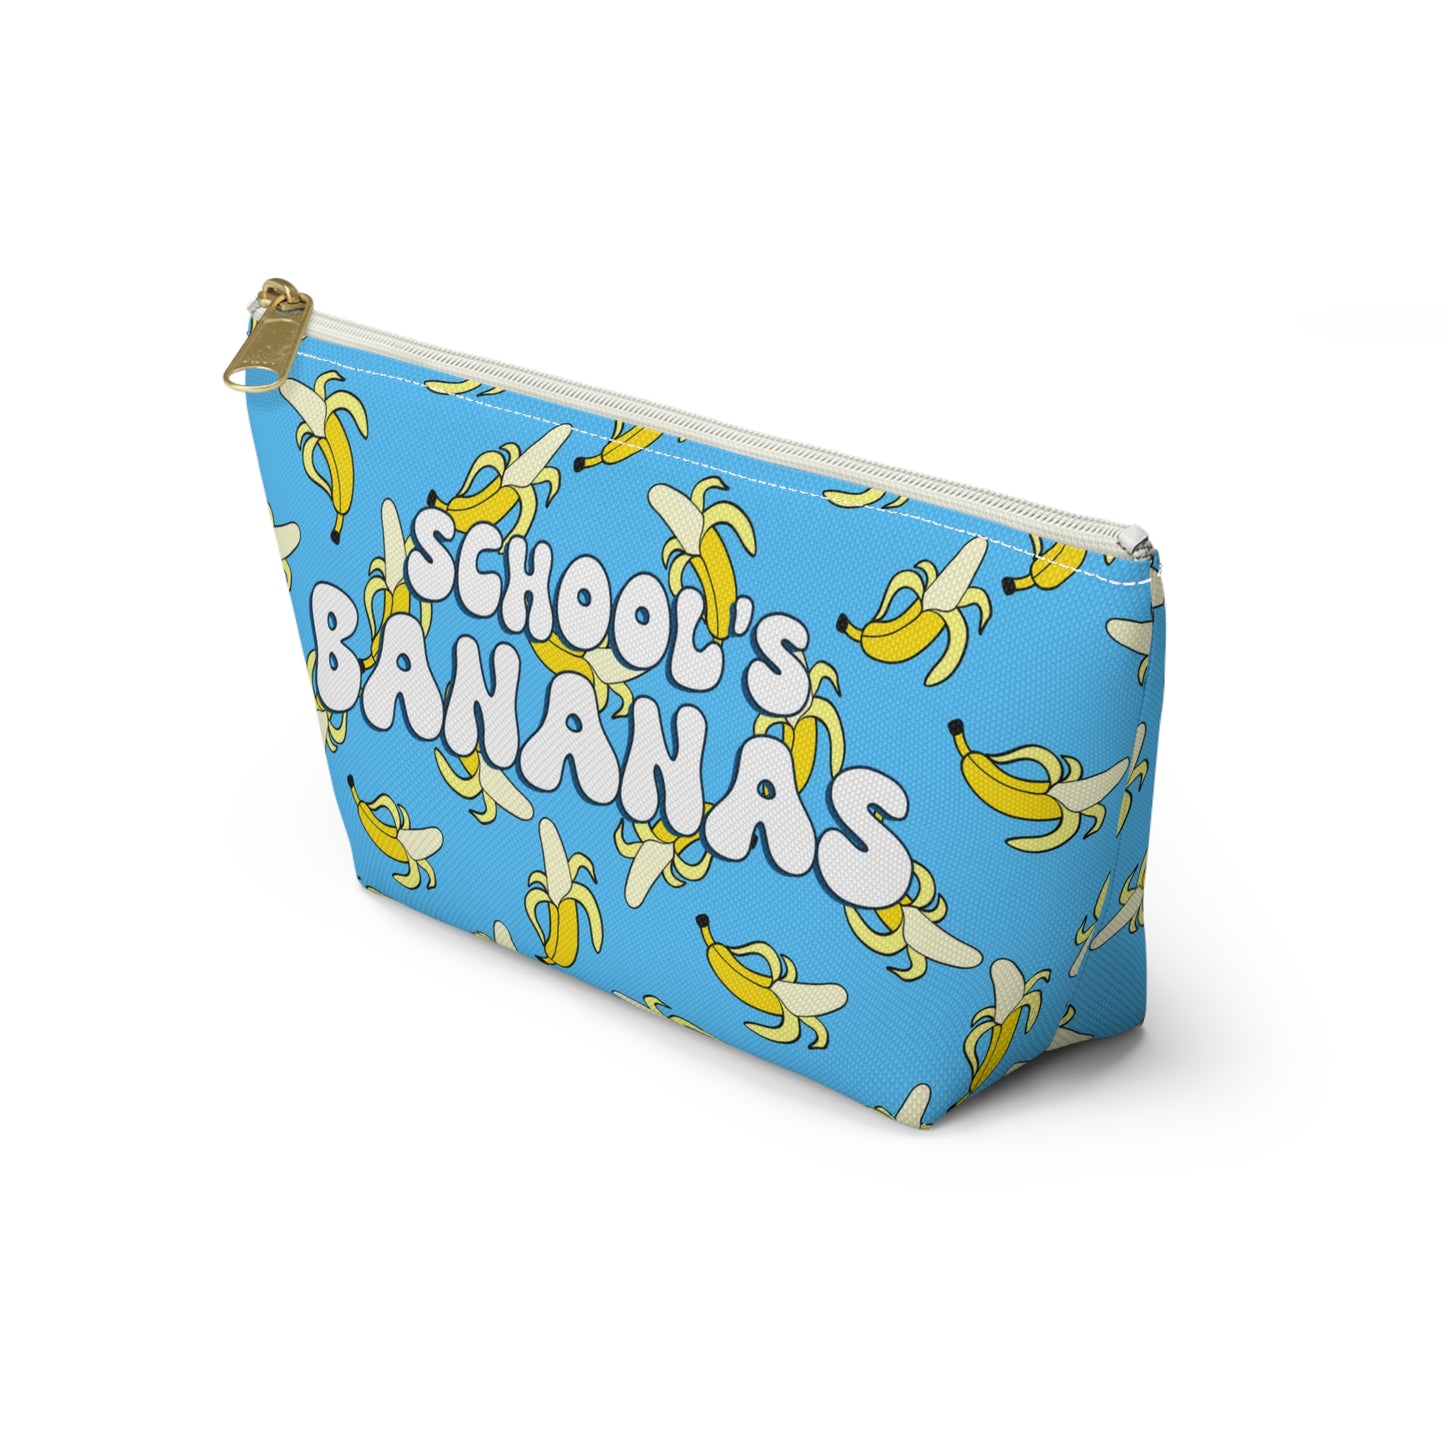 GU 'School's Banana's' Accessory Pouch